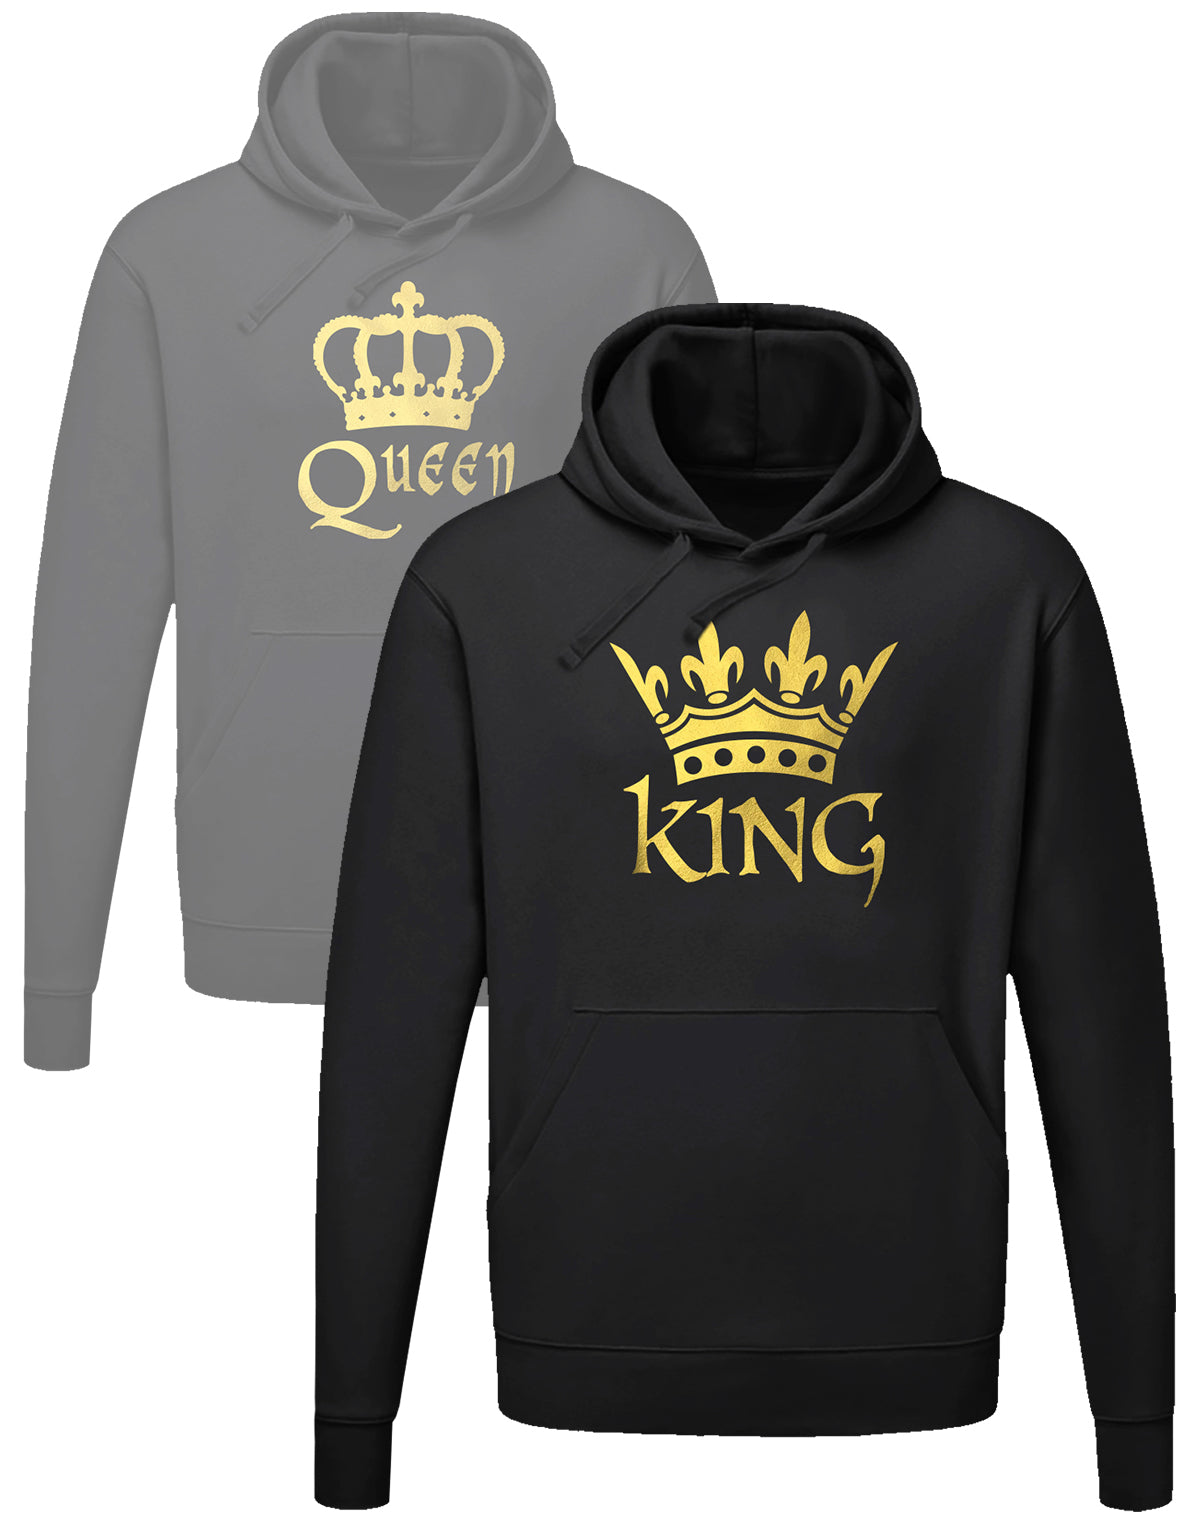 Couple Hoodie King Queen King mit Krone in Gold Schwarz